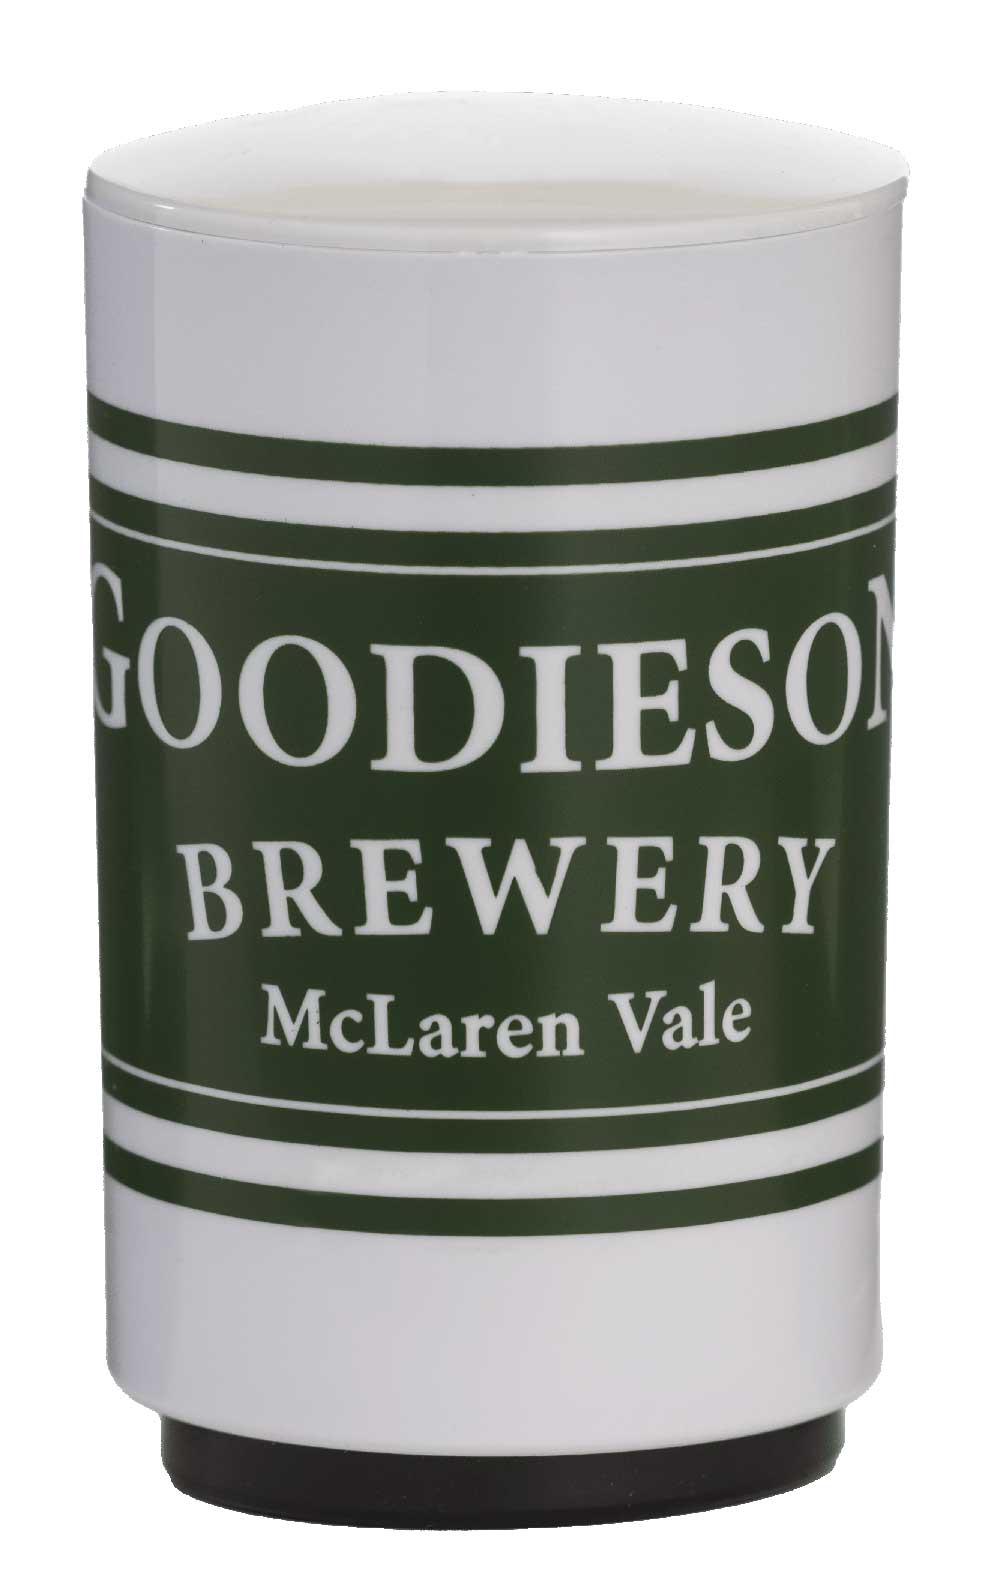 Goodieson Brewery